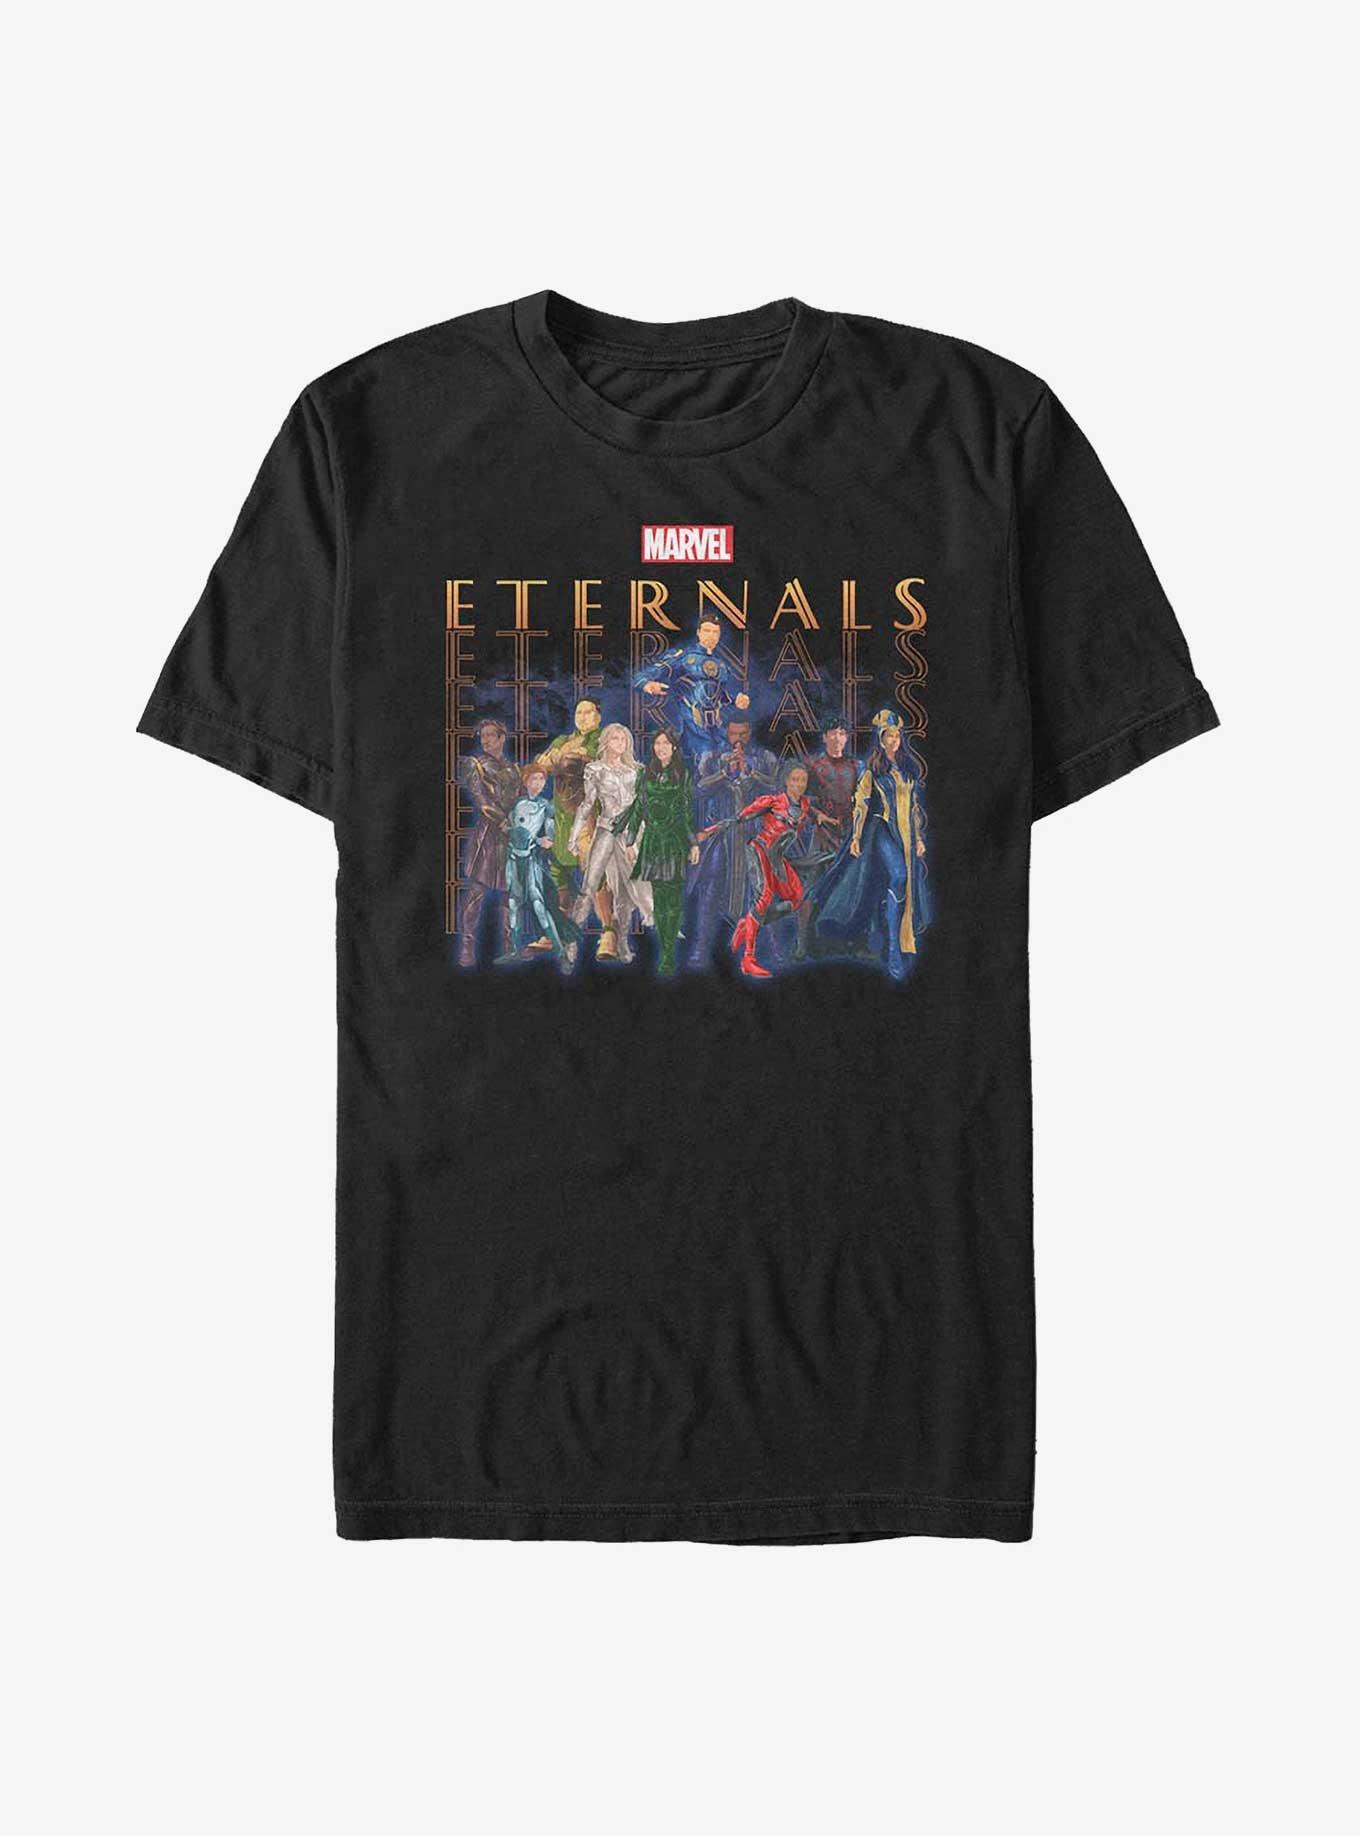 Marvel Eternals Eternals Group Repeating T-Shirt, BLACK, hi-res